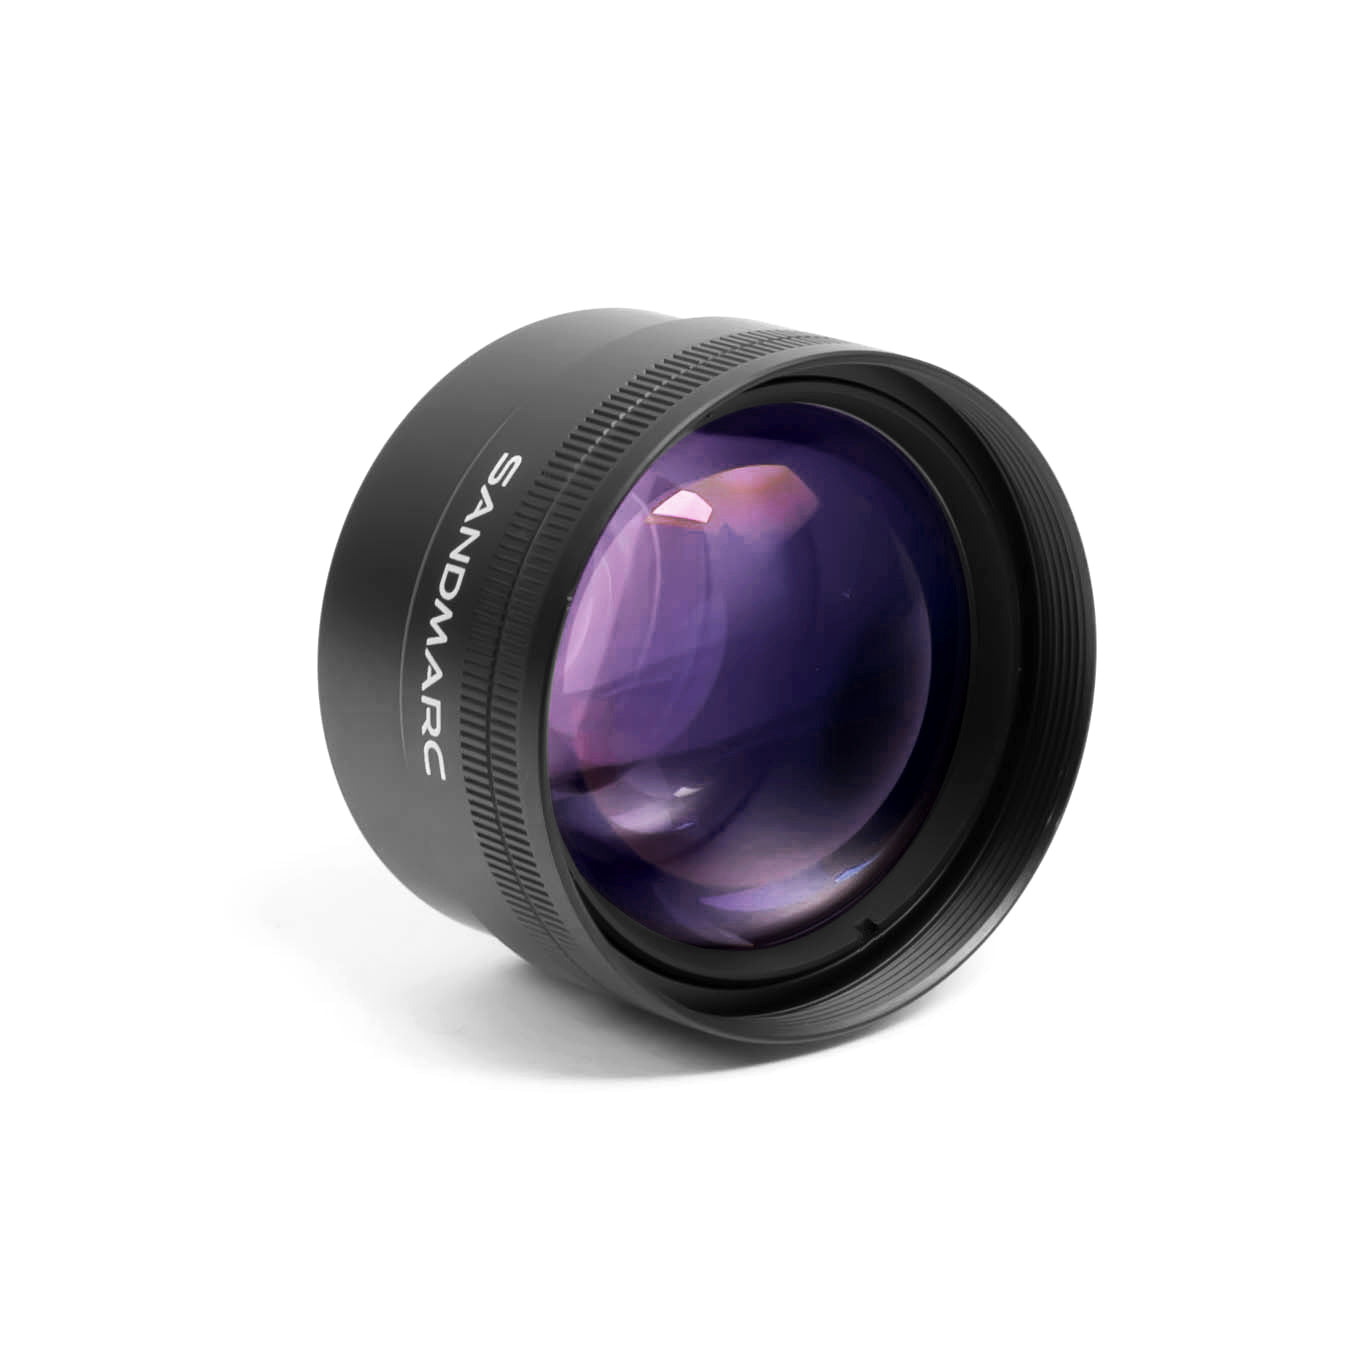 Telephoto Lens Edition - iPhone 11 Pro Max - SANDMARC